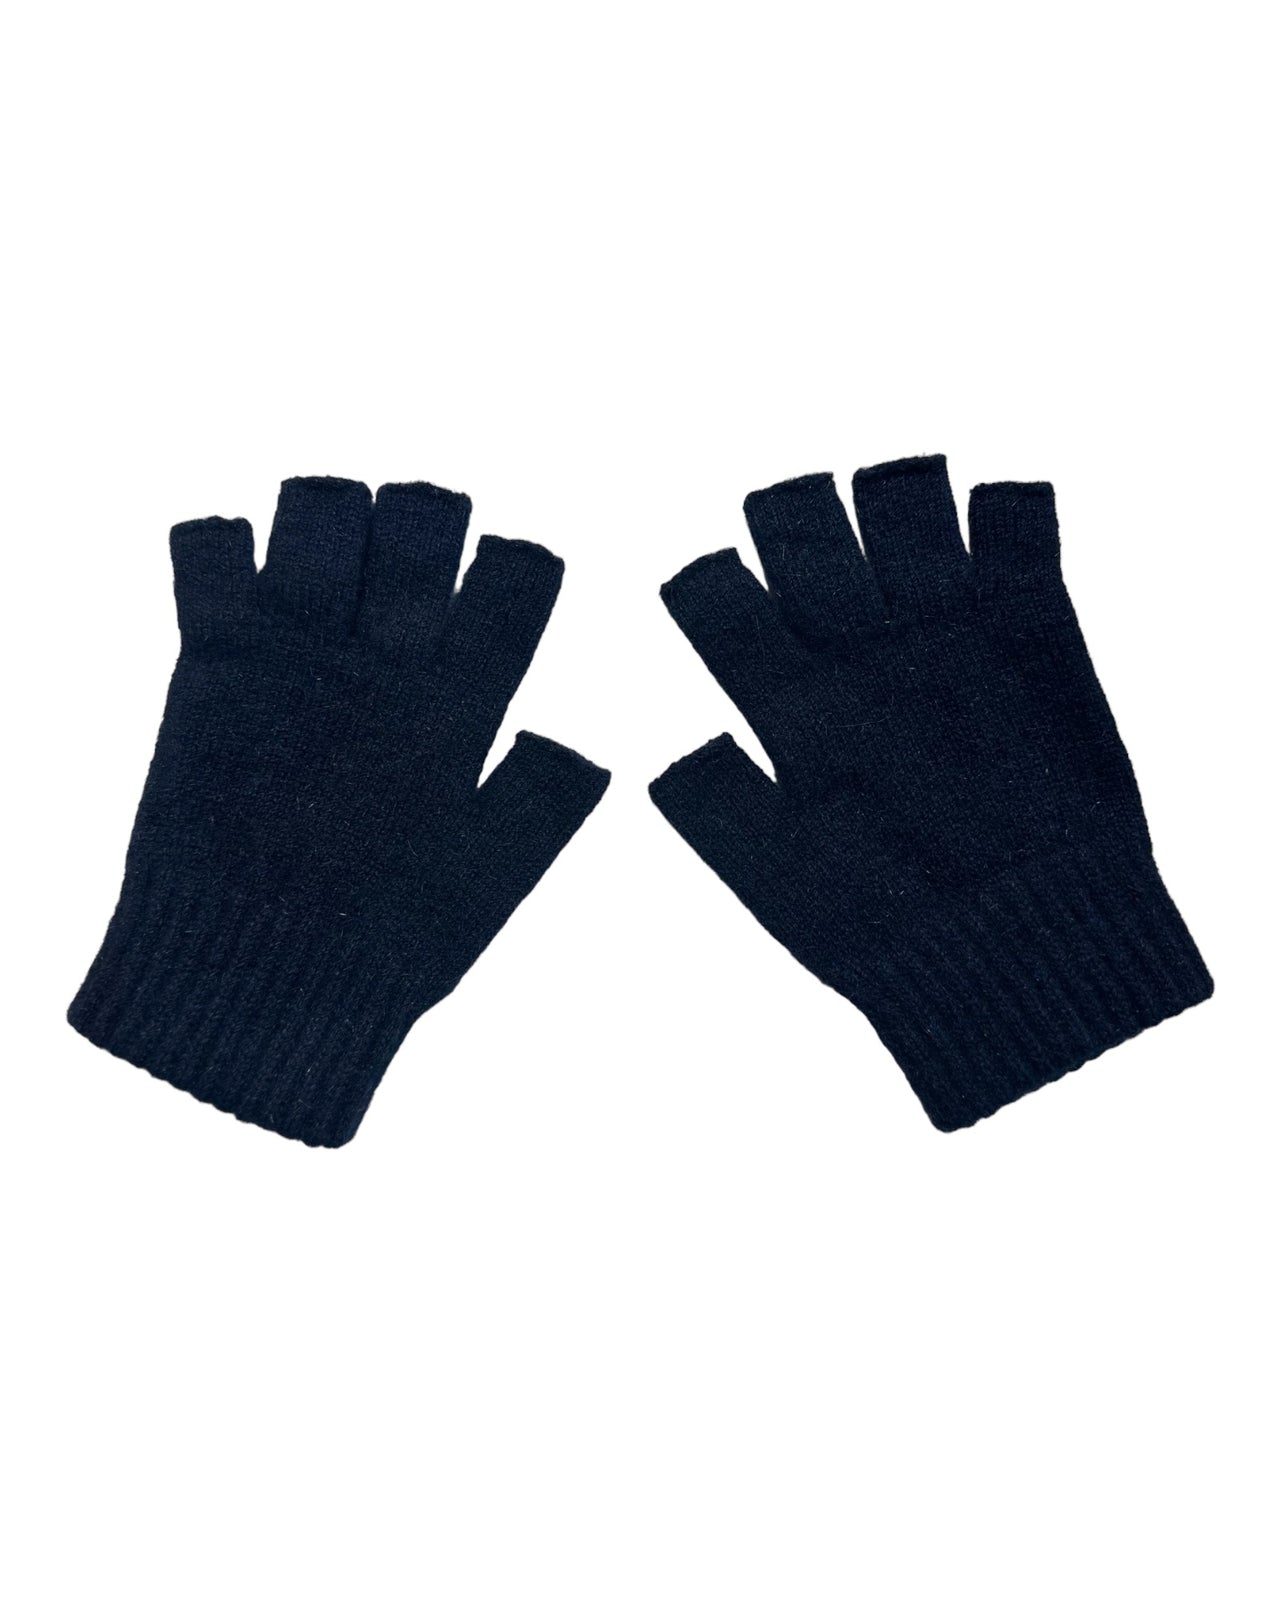 Navy Blue Possum Merino and Silk Fingerless Gloves